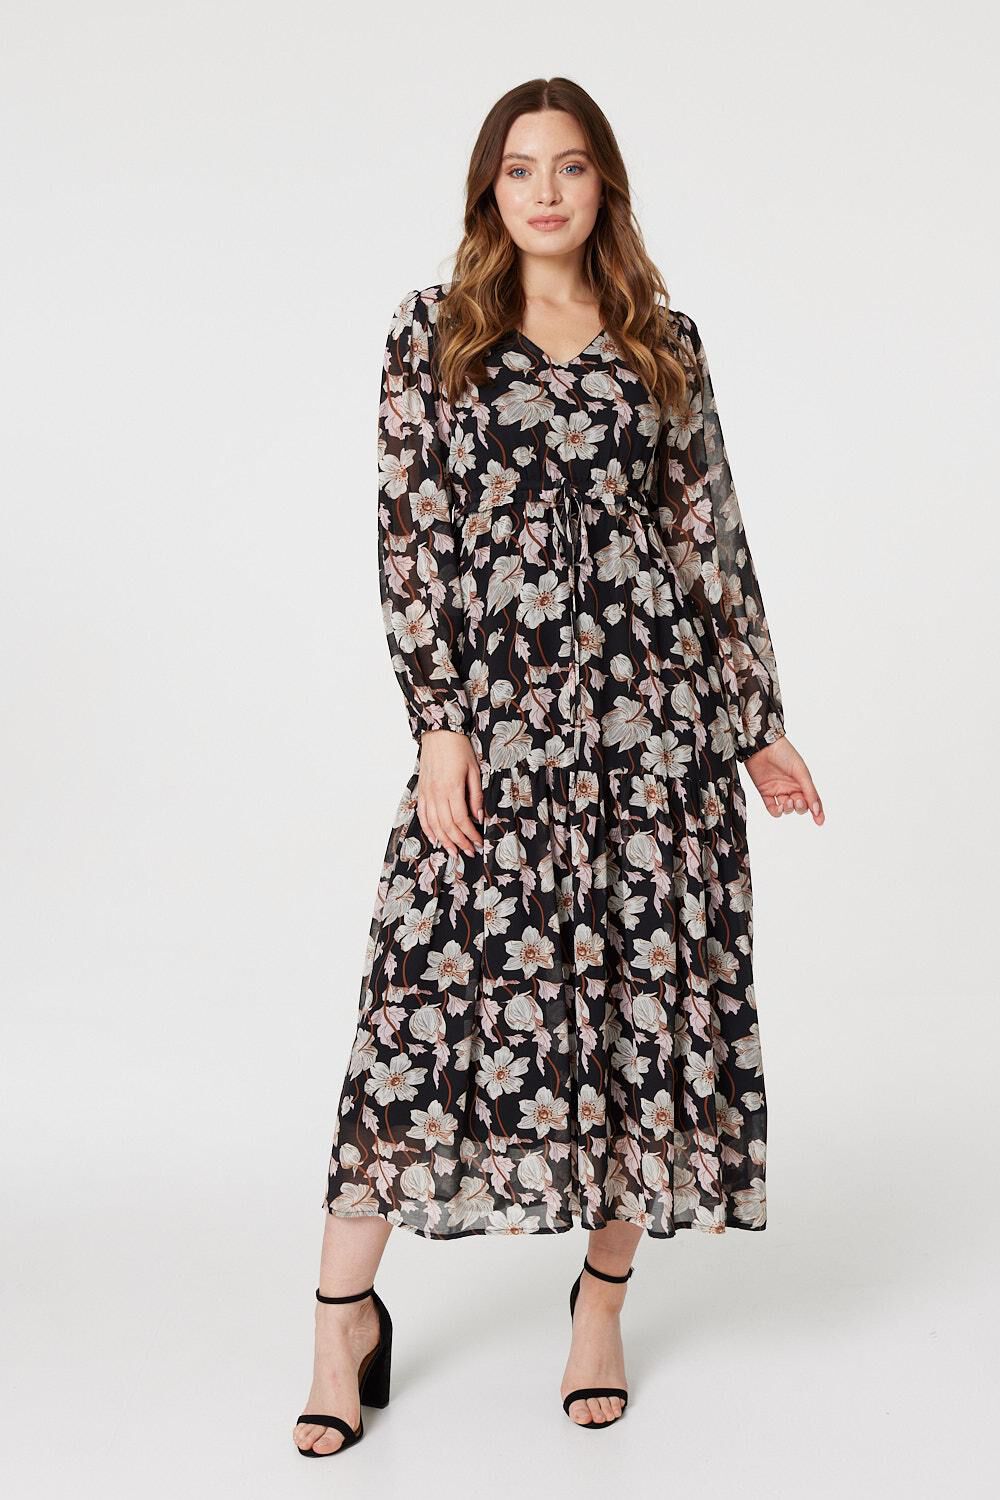 Izabel London Black - Floral Drawstring Waist Midi Dress, Size: 16